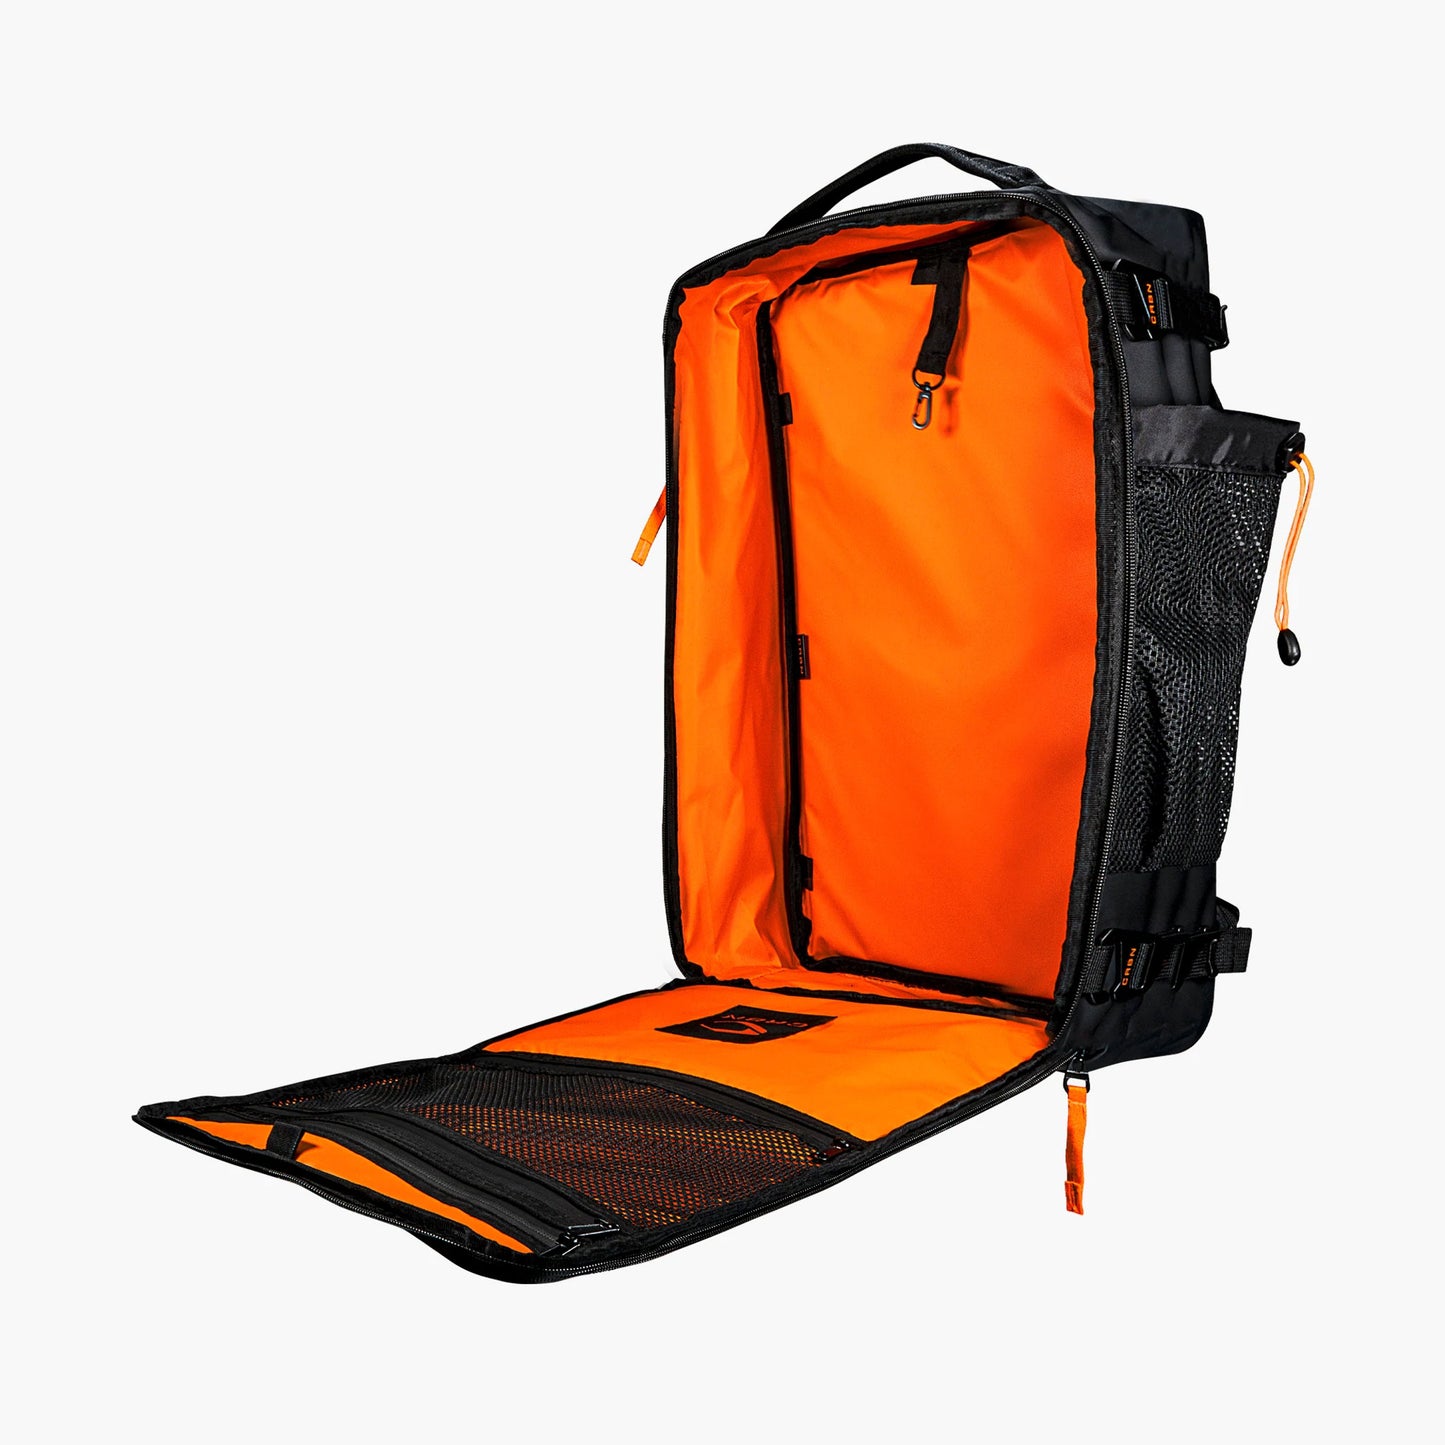 CRBN Carbon Paintball 24L Backpack - Matte Black